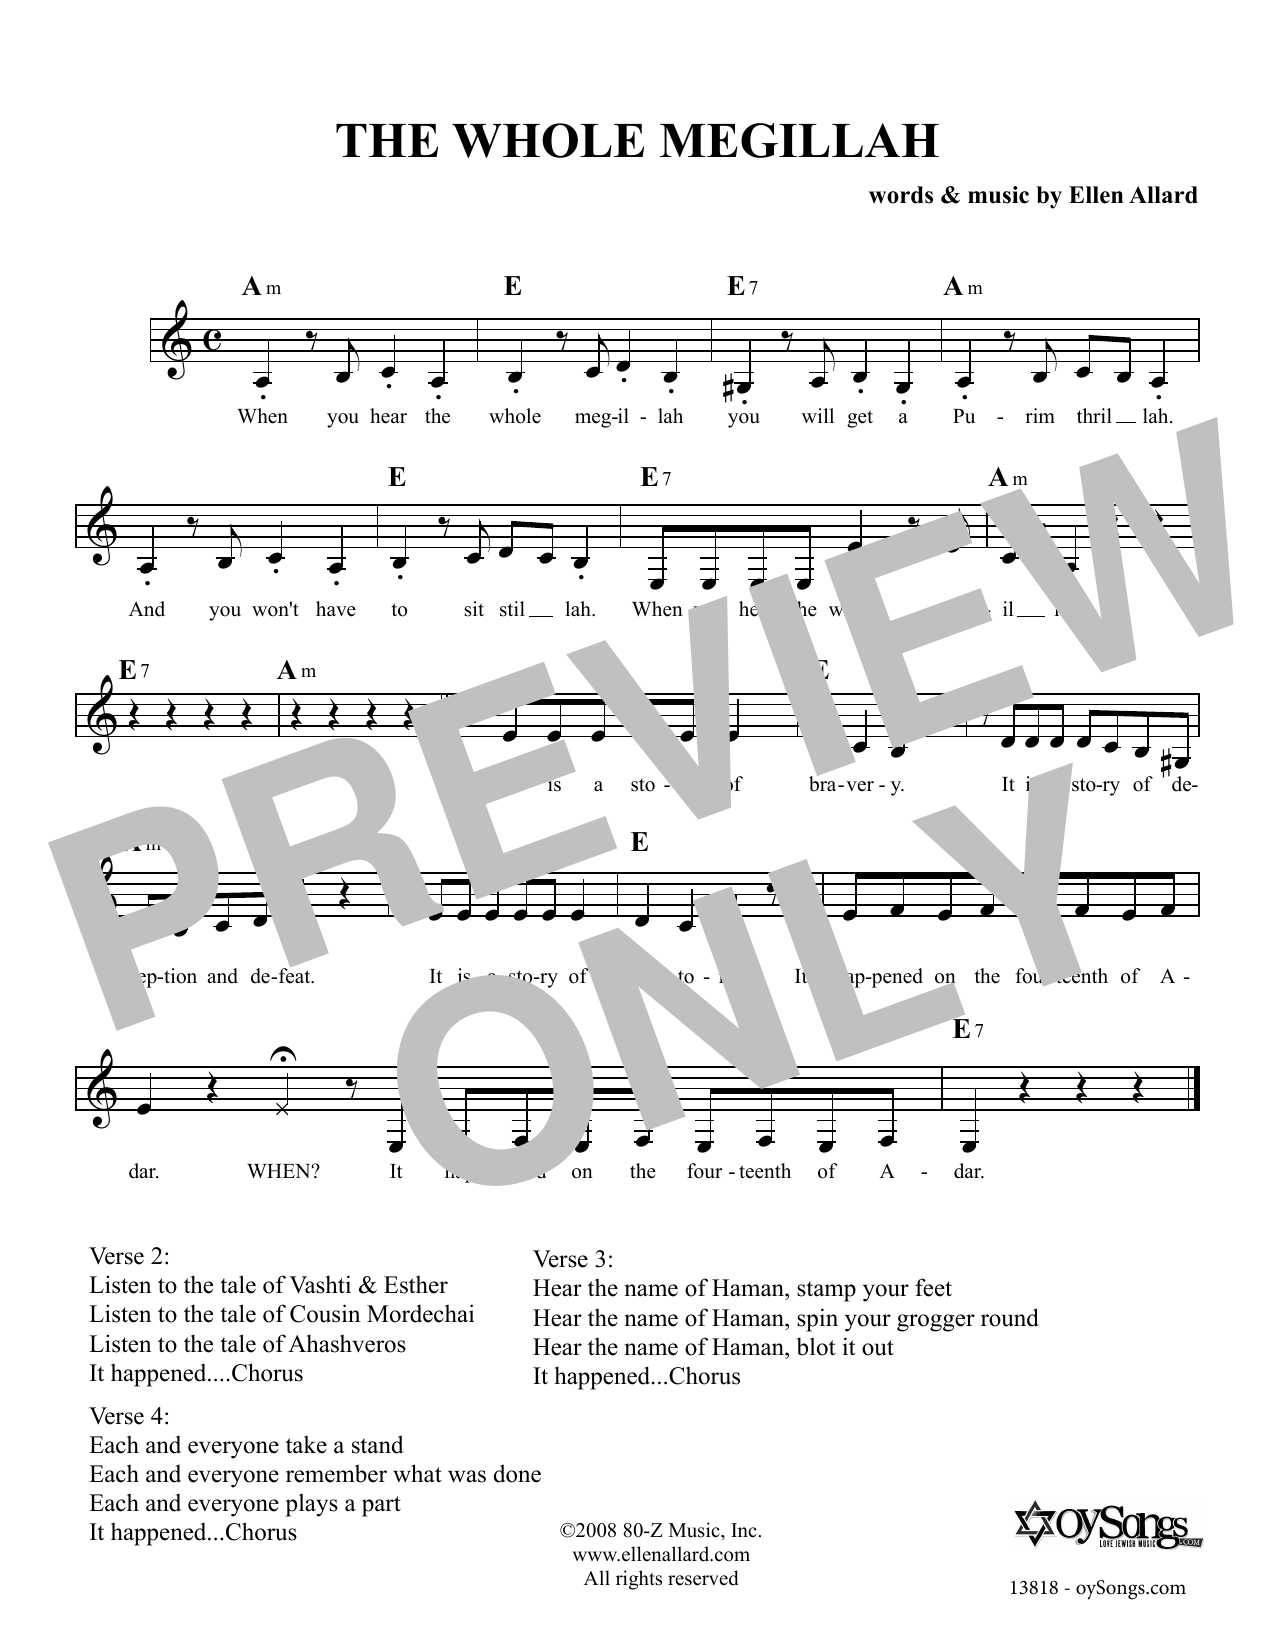 Ellen Allard The Whole Megillah Sheet Music Notes & Chords for Melody Line, Lyrics & Chords - Download or Print PDF